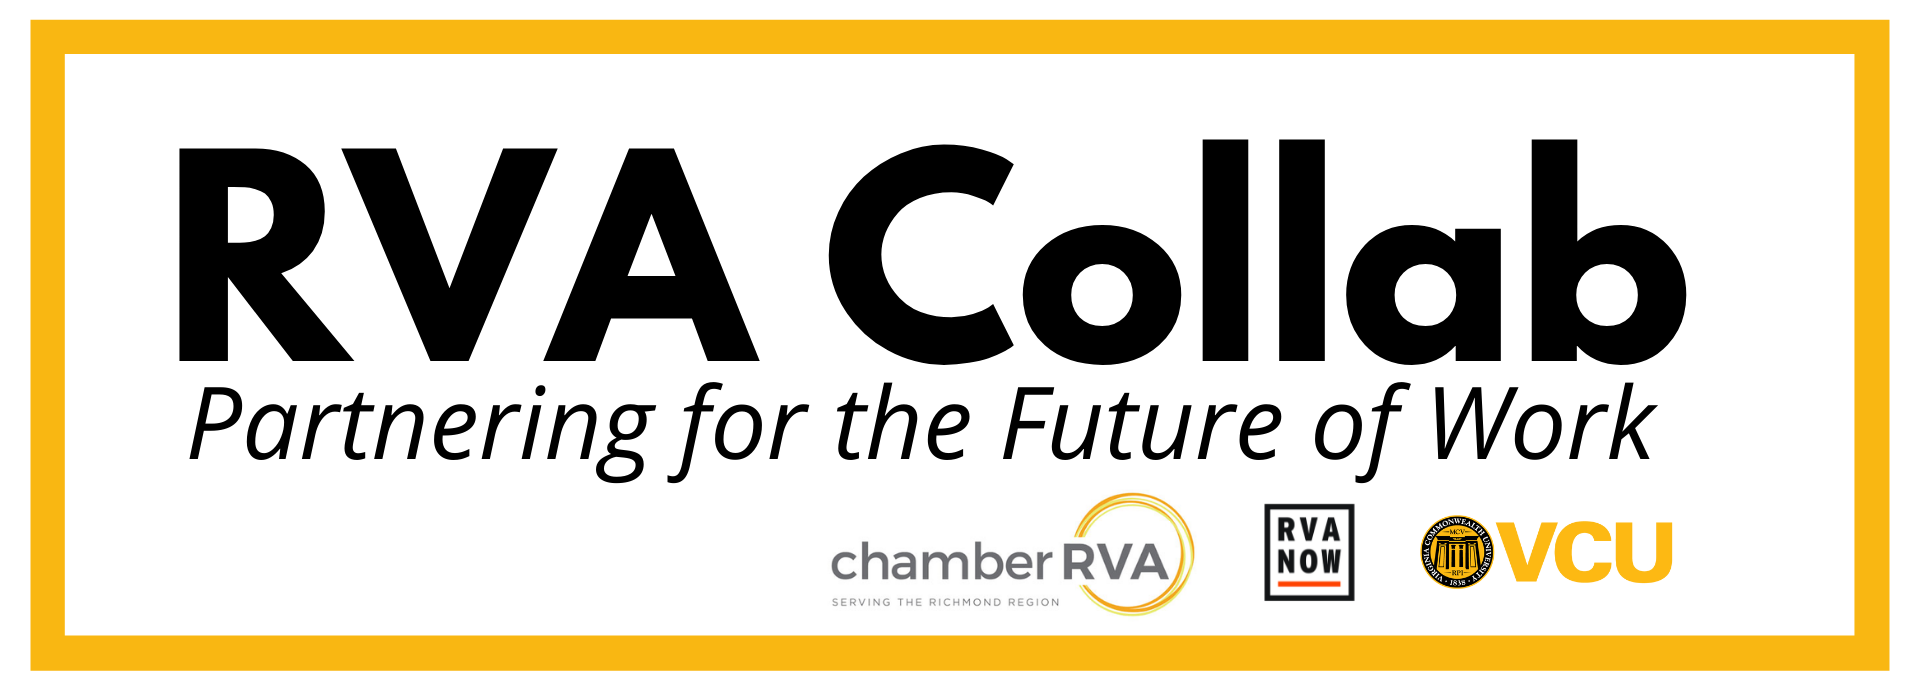 RVA Collab logo